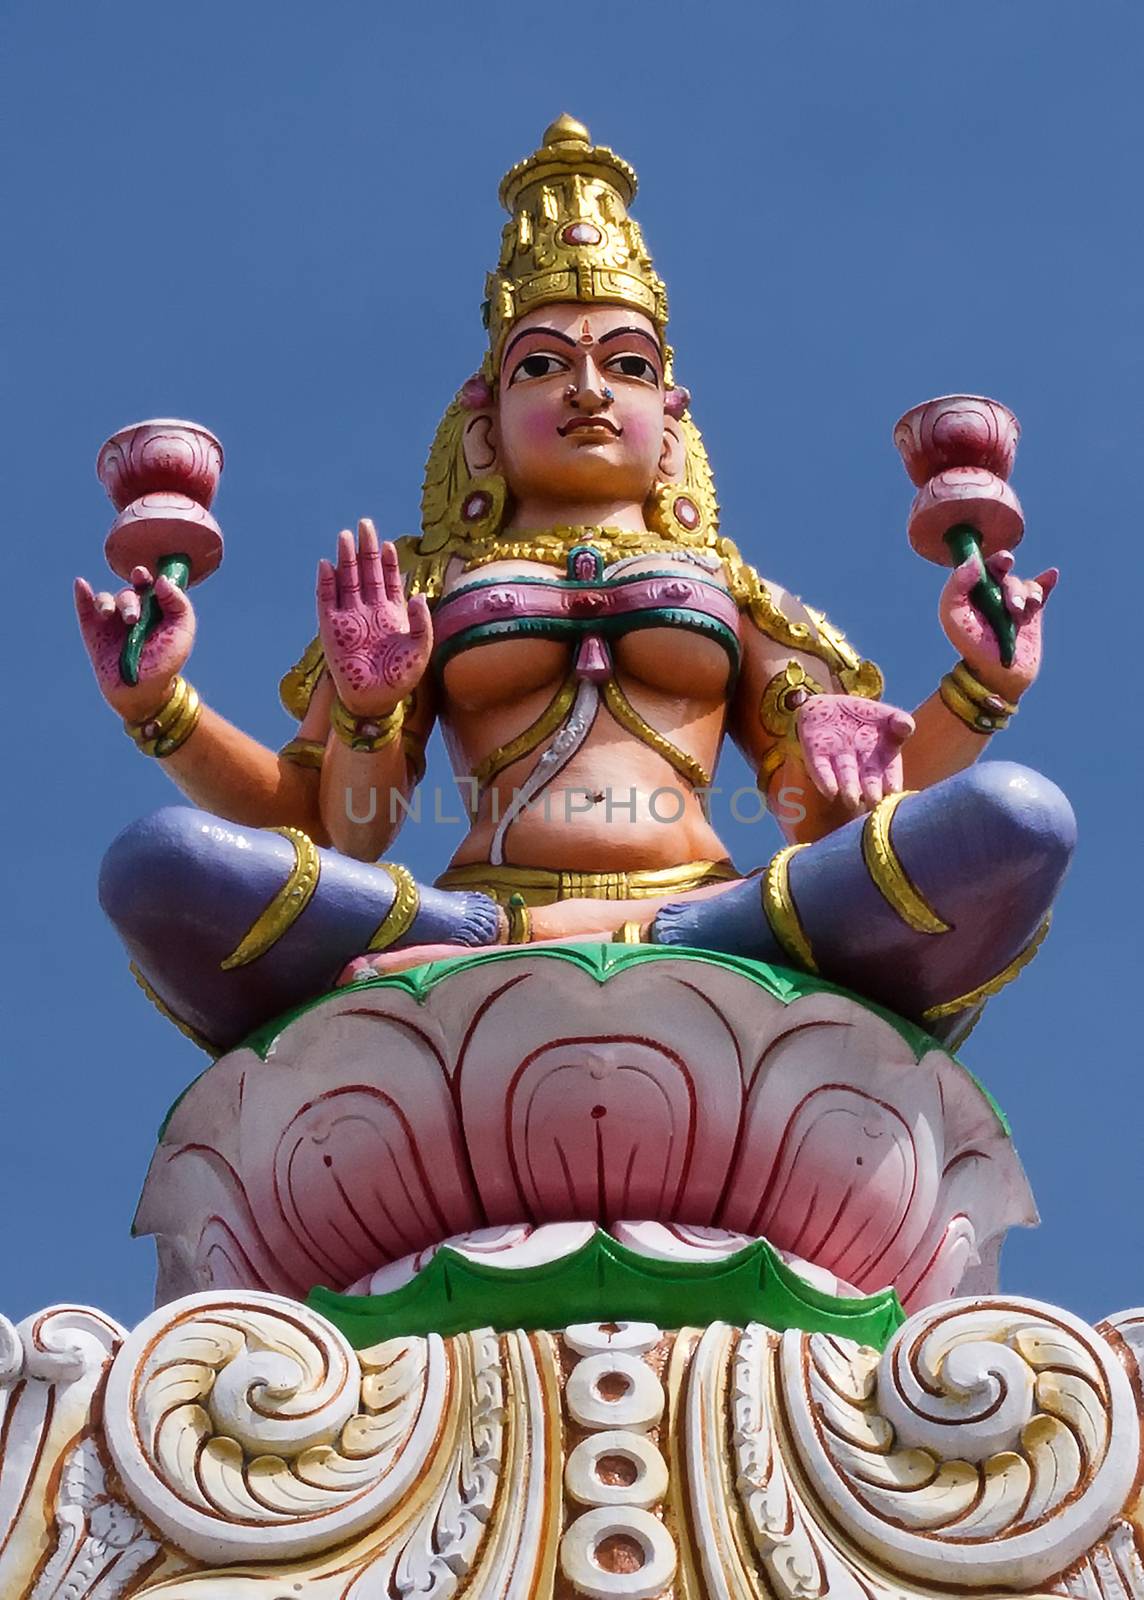 Goddess Lakshmi on top of the entrance gate at Sripuram, the Golden Temple, in Vellore, Tamil Nadu, India.